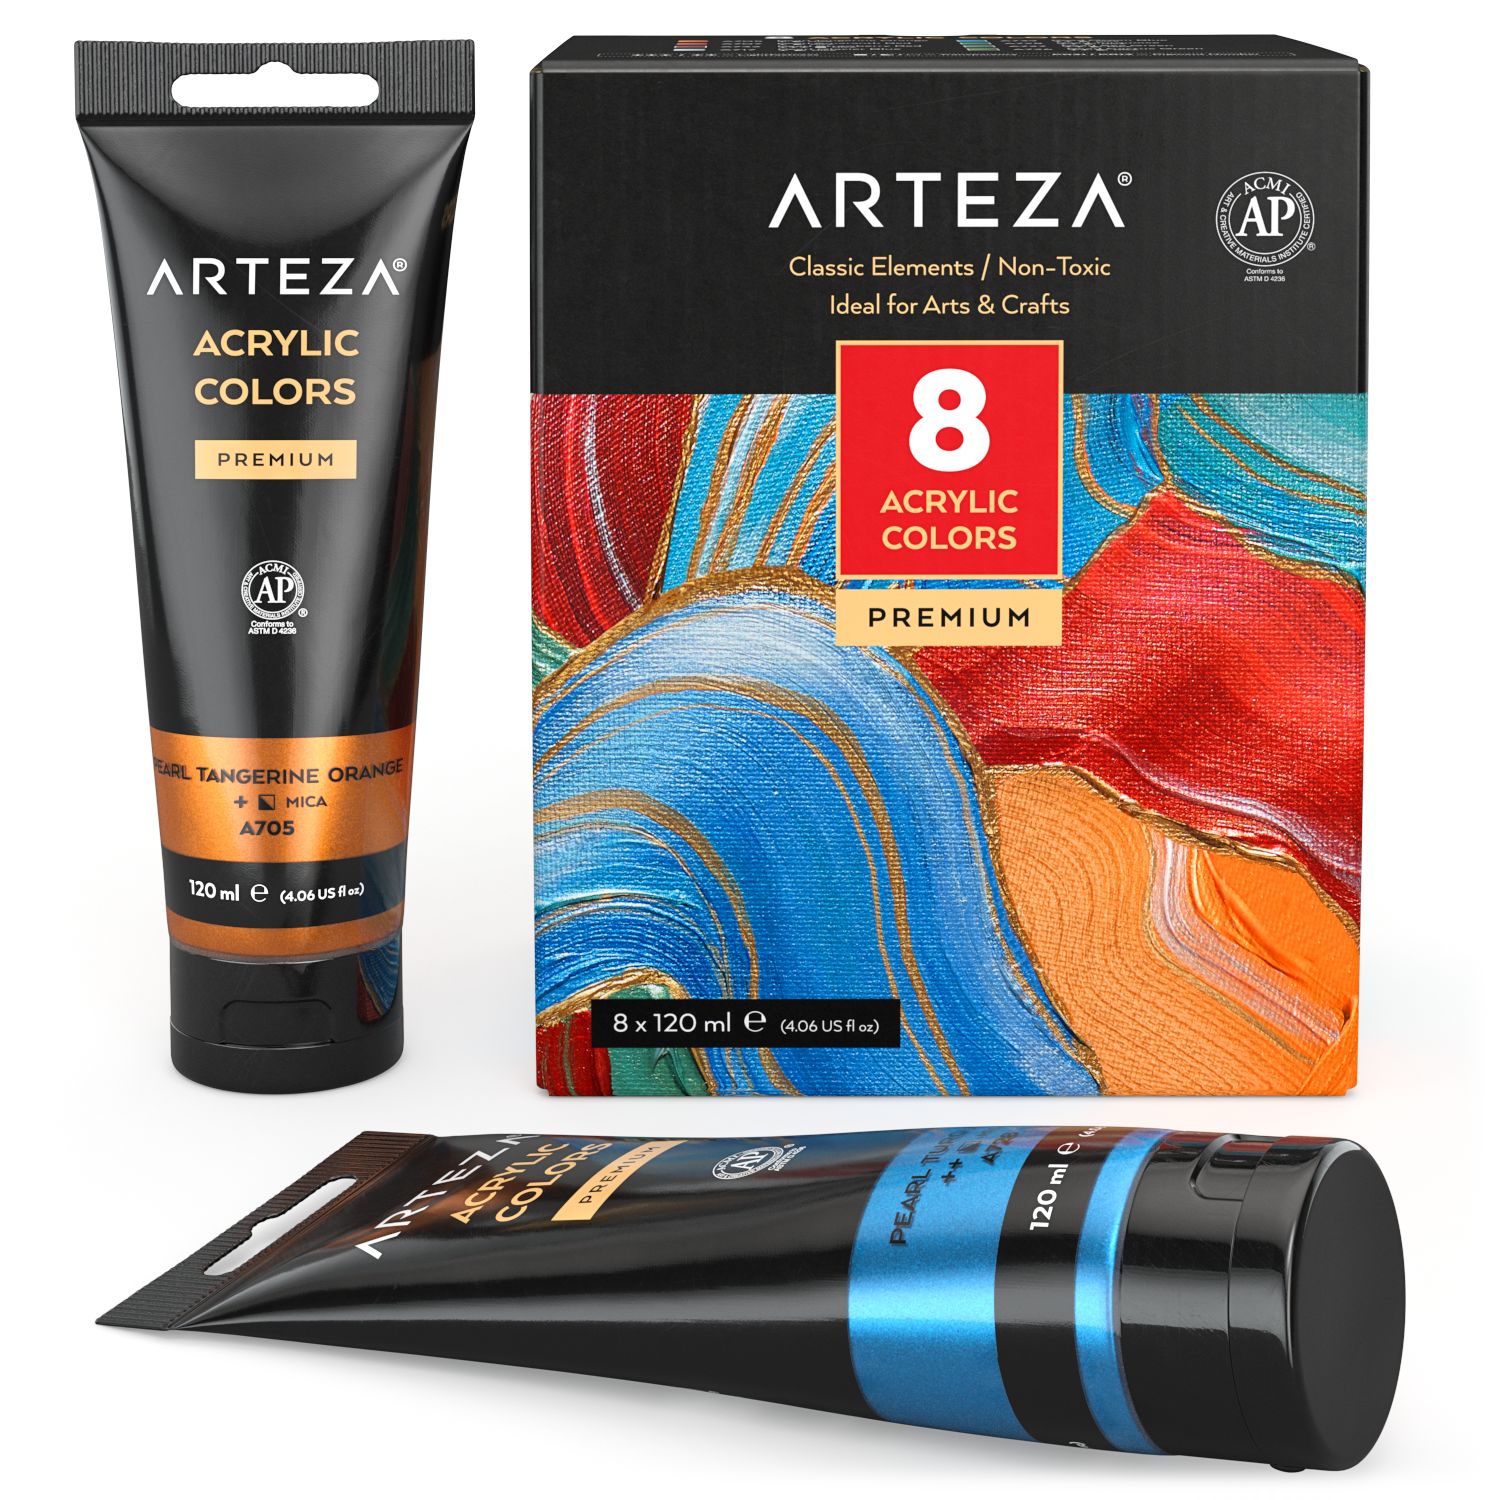 ARTEZA Multi-colored Acrylic Metallic Paint (4-oz) at